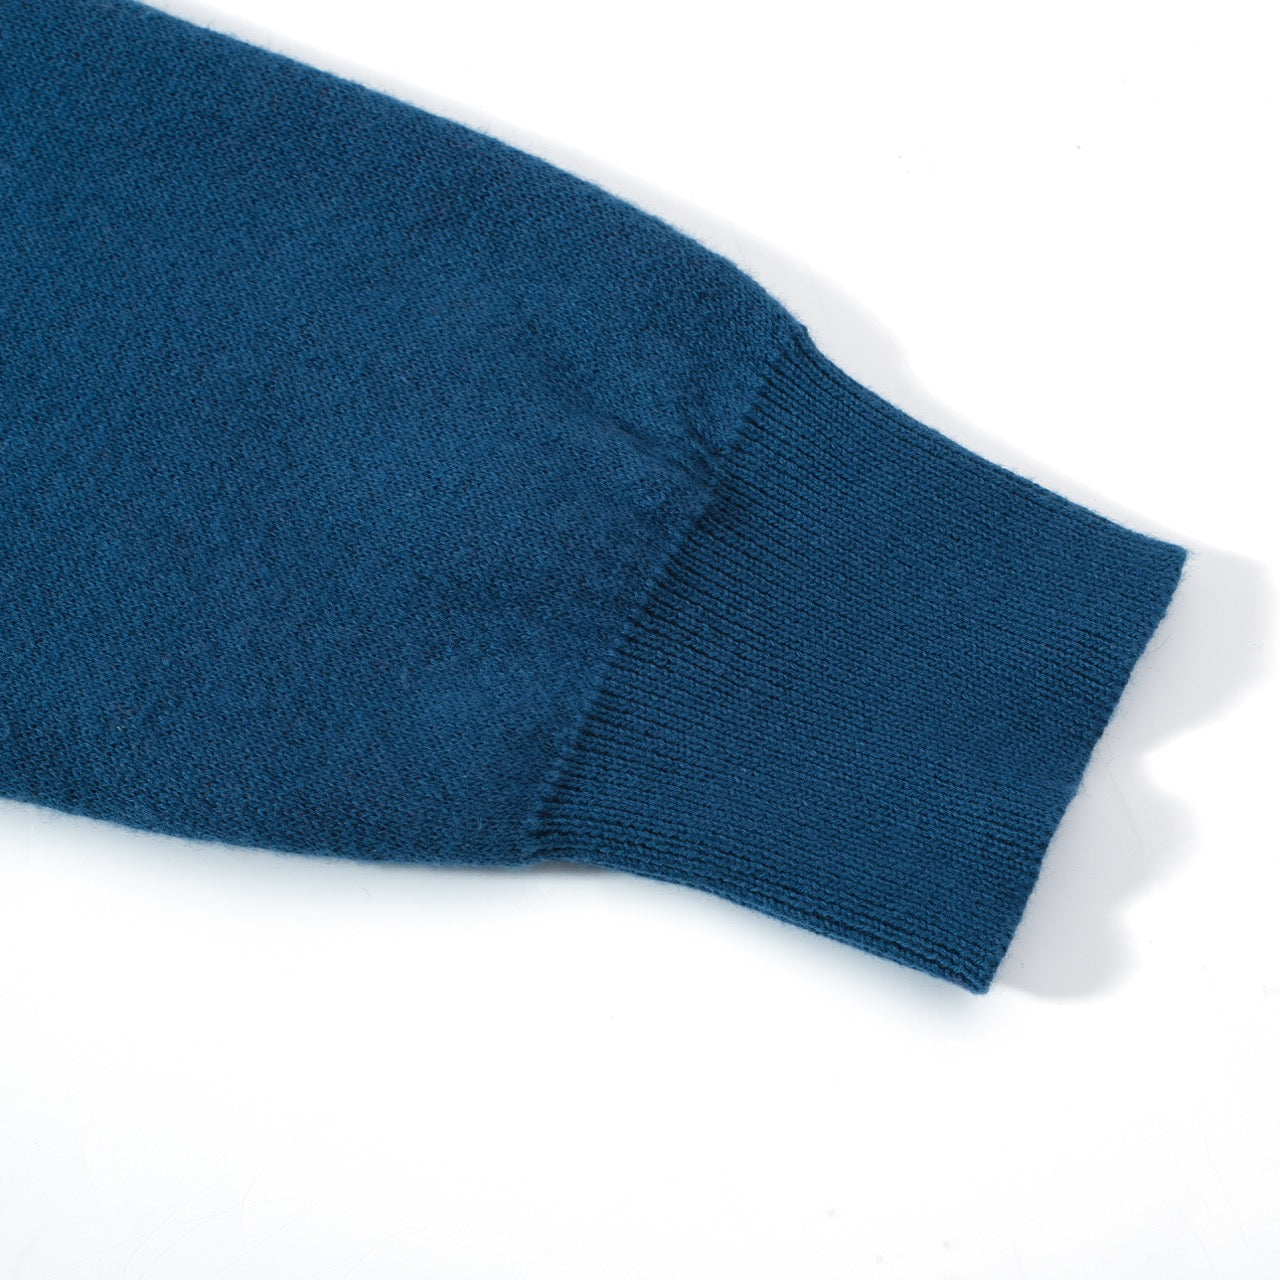 OXKNIT Women Vintage Clothing 1970s Mod Style Casual Long Sleeve Dark Blue Lightning Knit Retro T-shirts